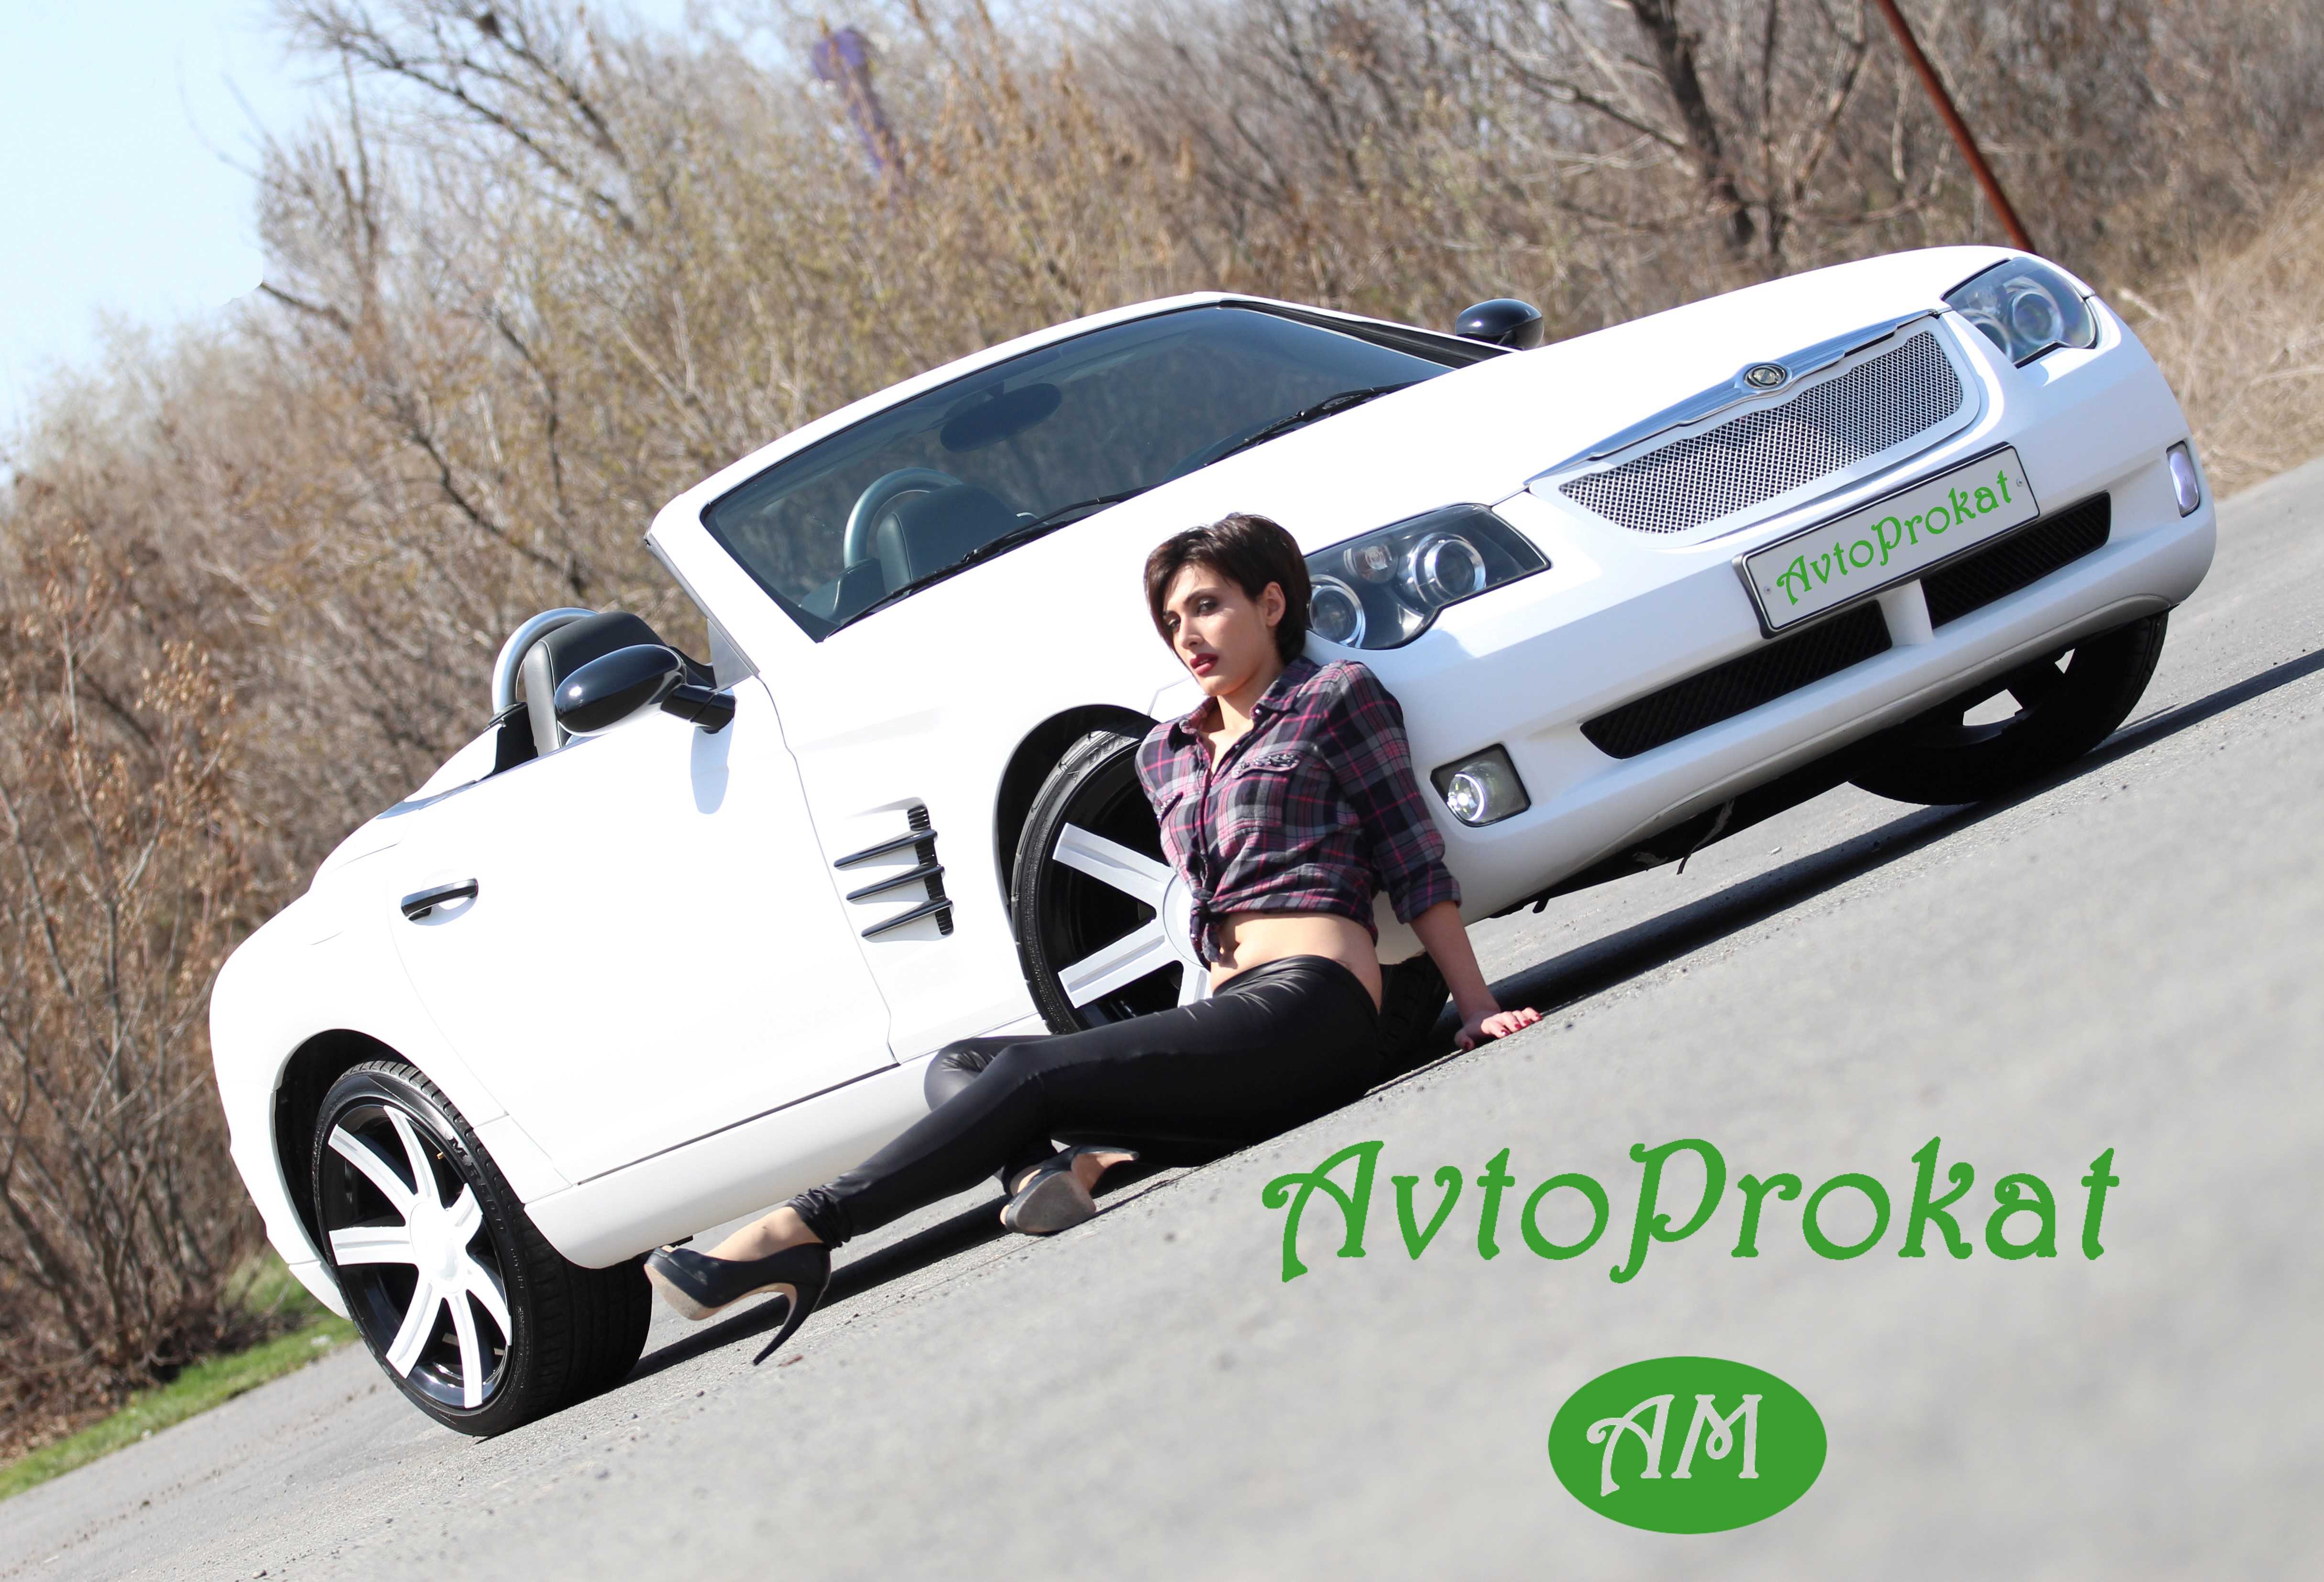 Rent a car in Yerevan, avtoprokat.am     Saryan 5, +37499075275, +37495075275